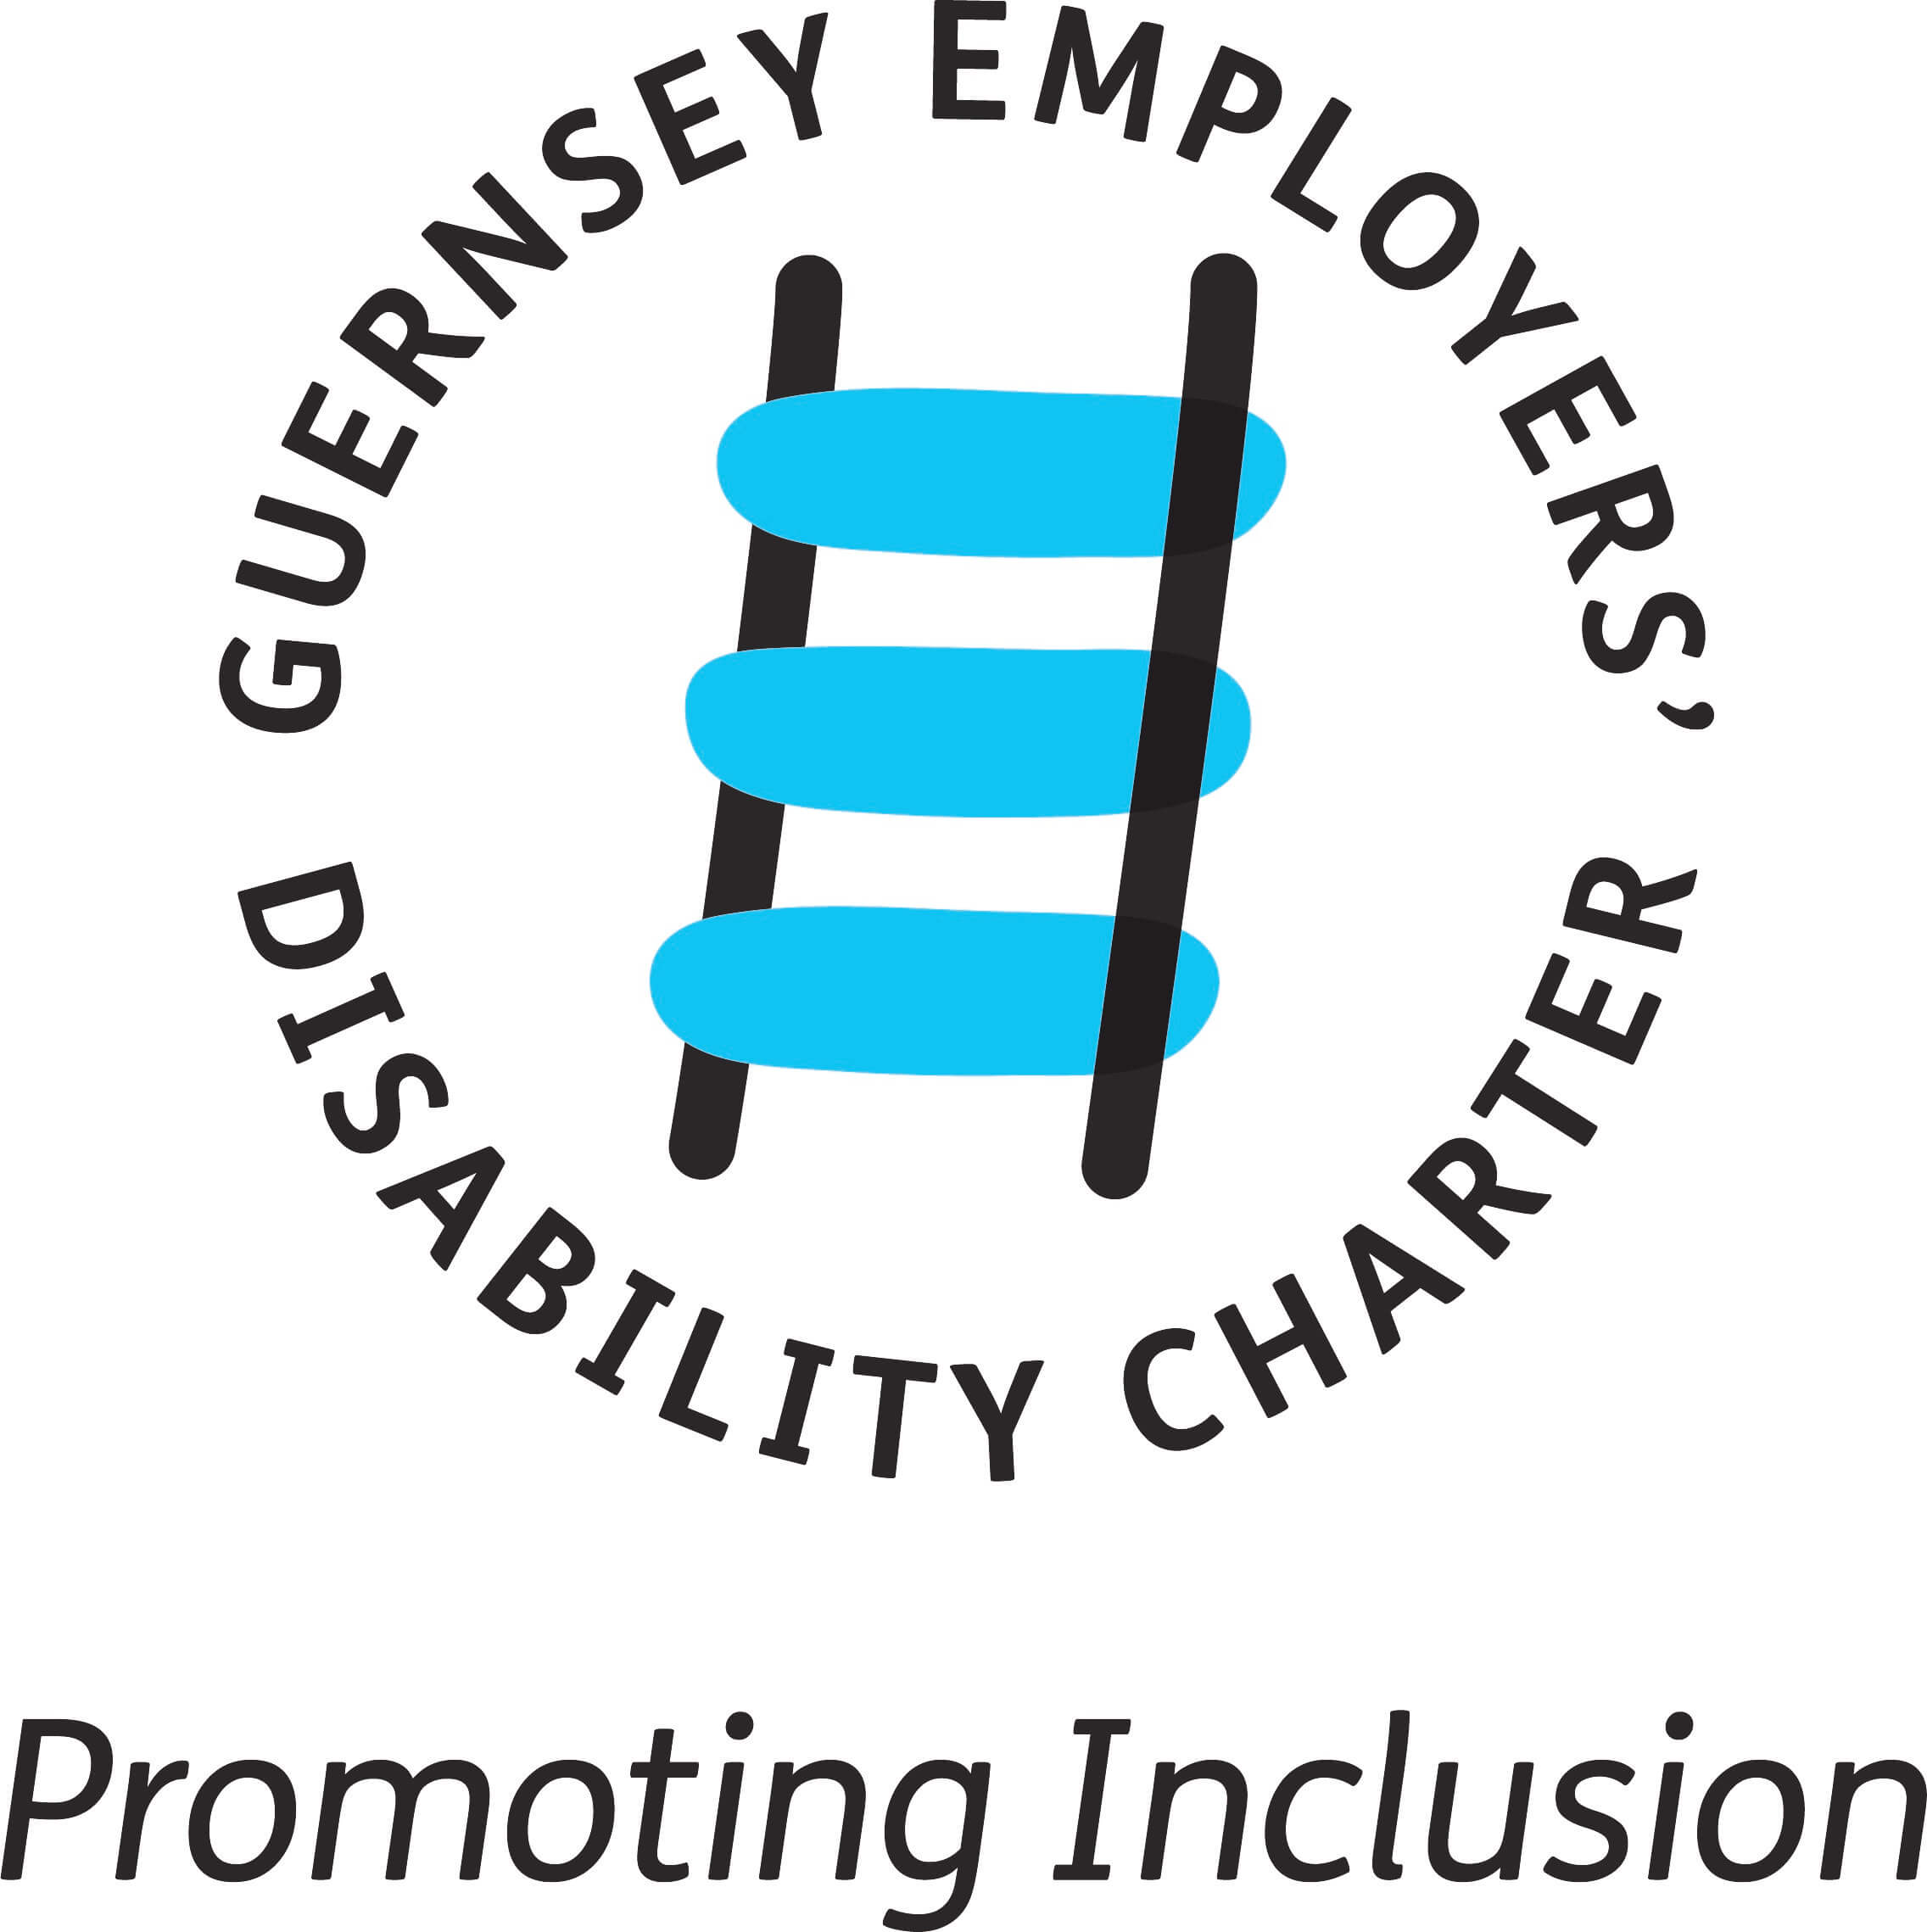 guernsey employers disability charter logo